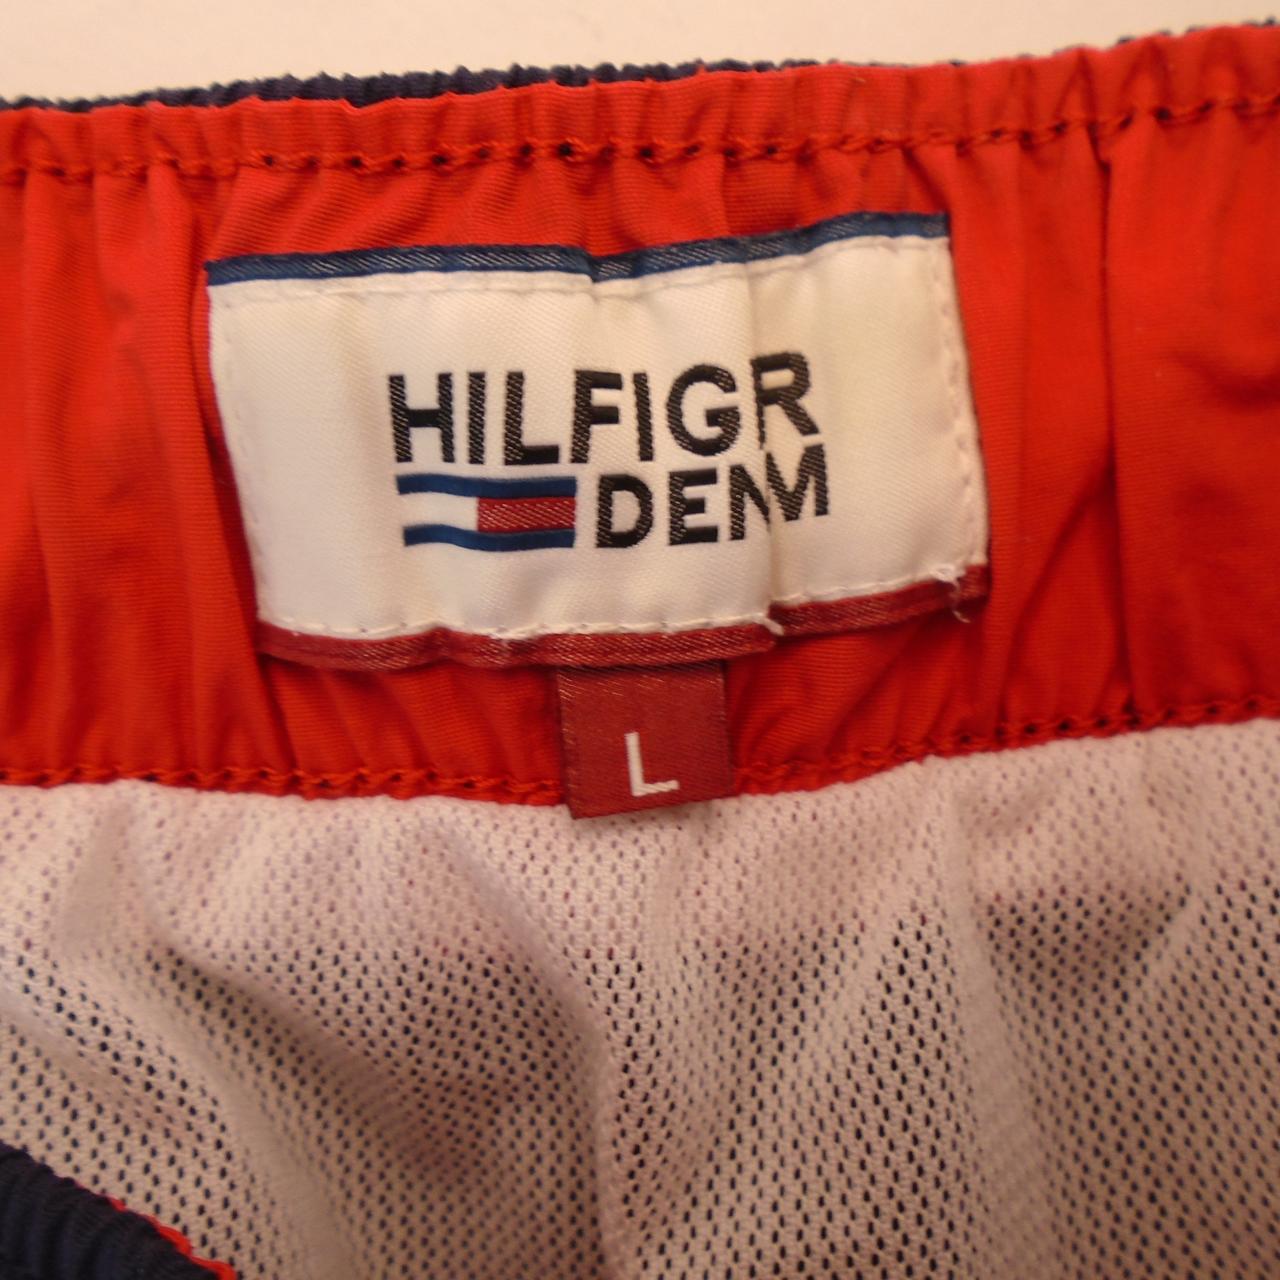 Pantalones cortos de hombre Tommy Hilfiger. Azul oscuro. L. Usado. Bien